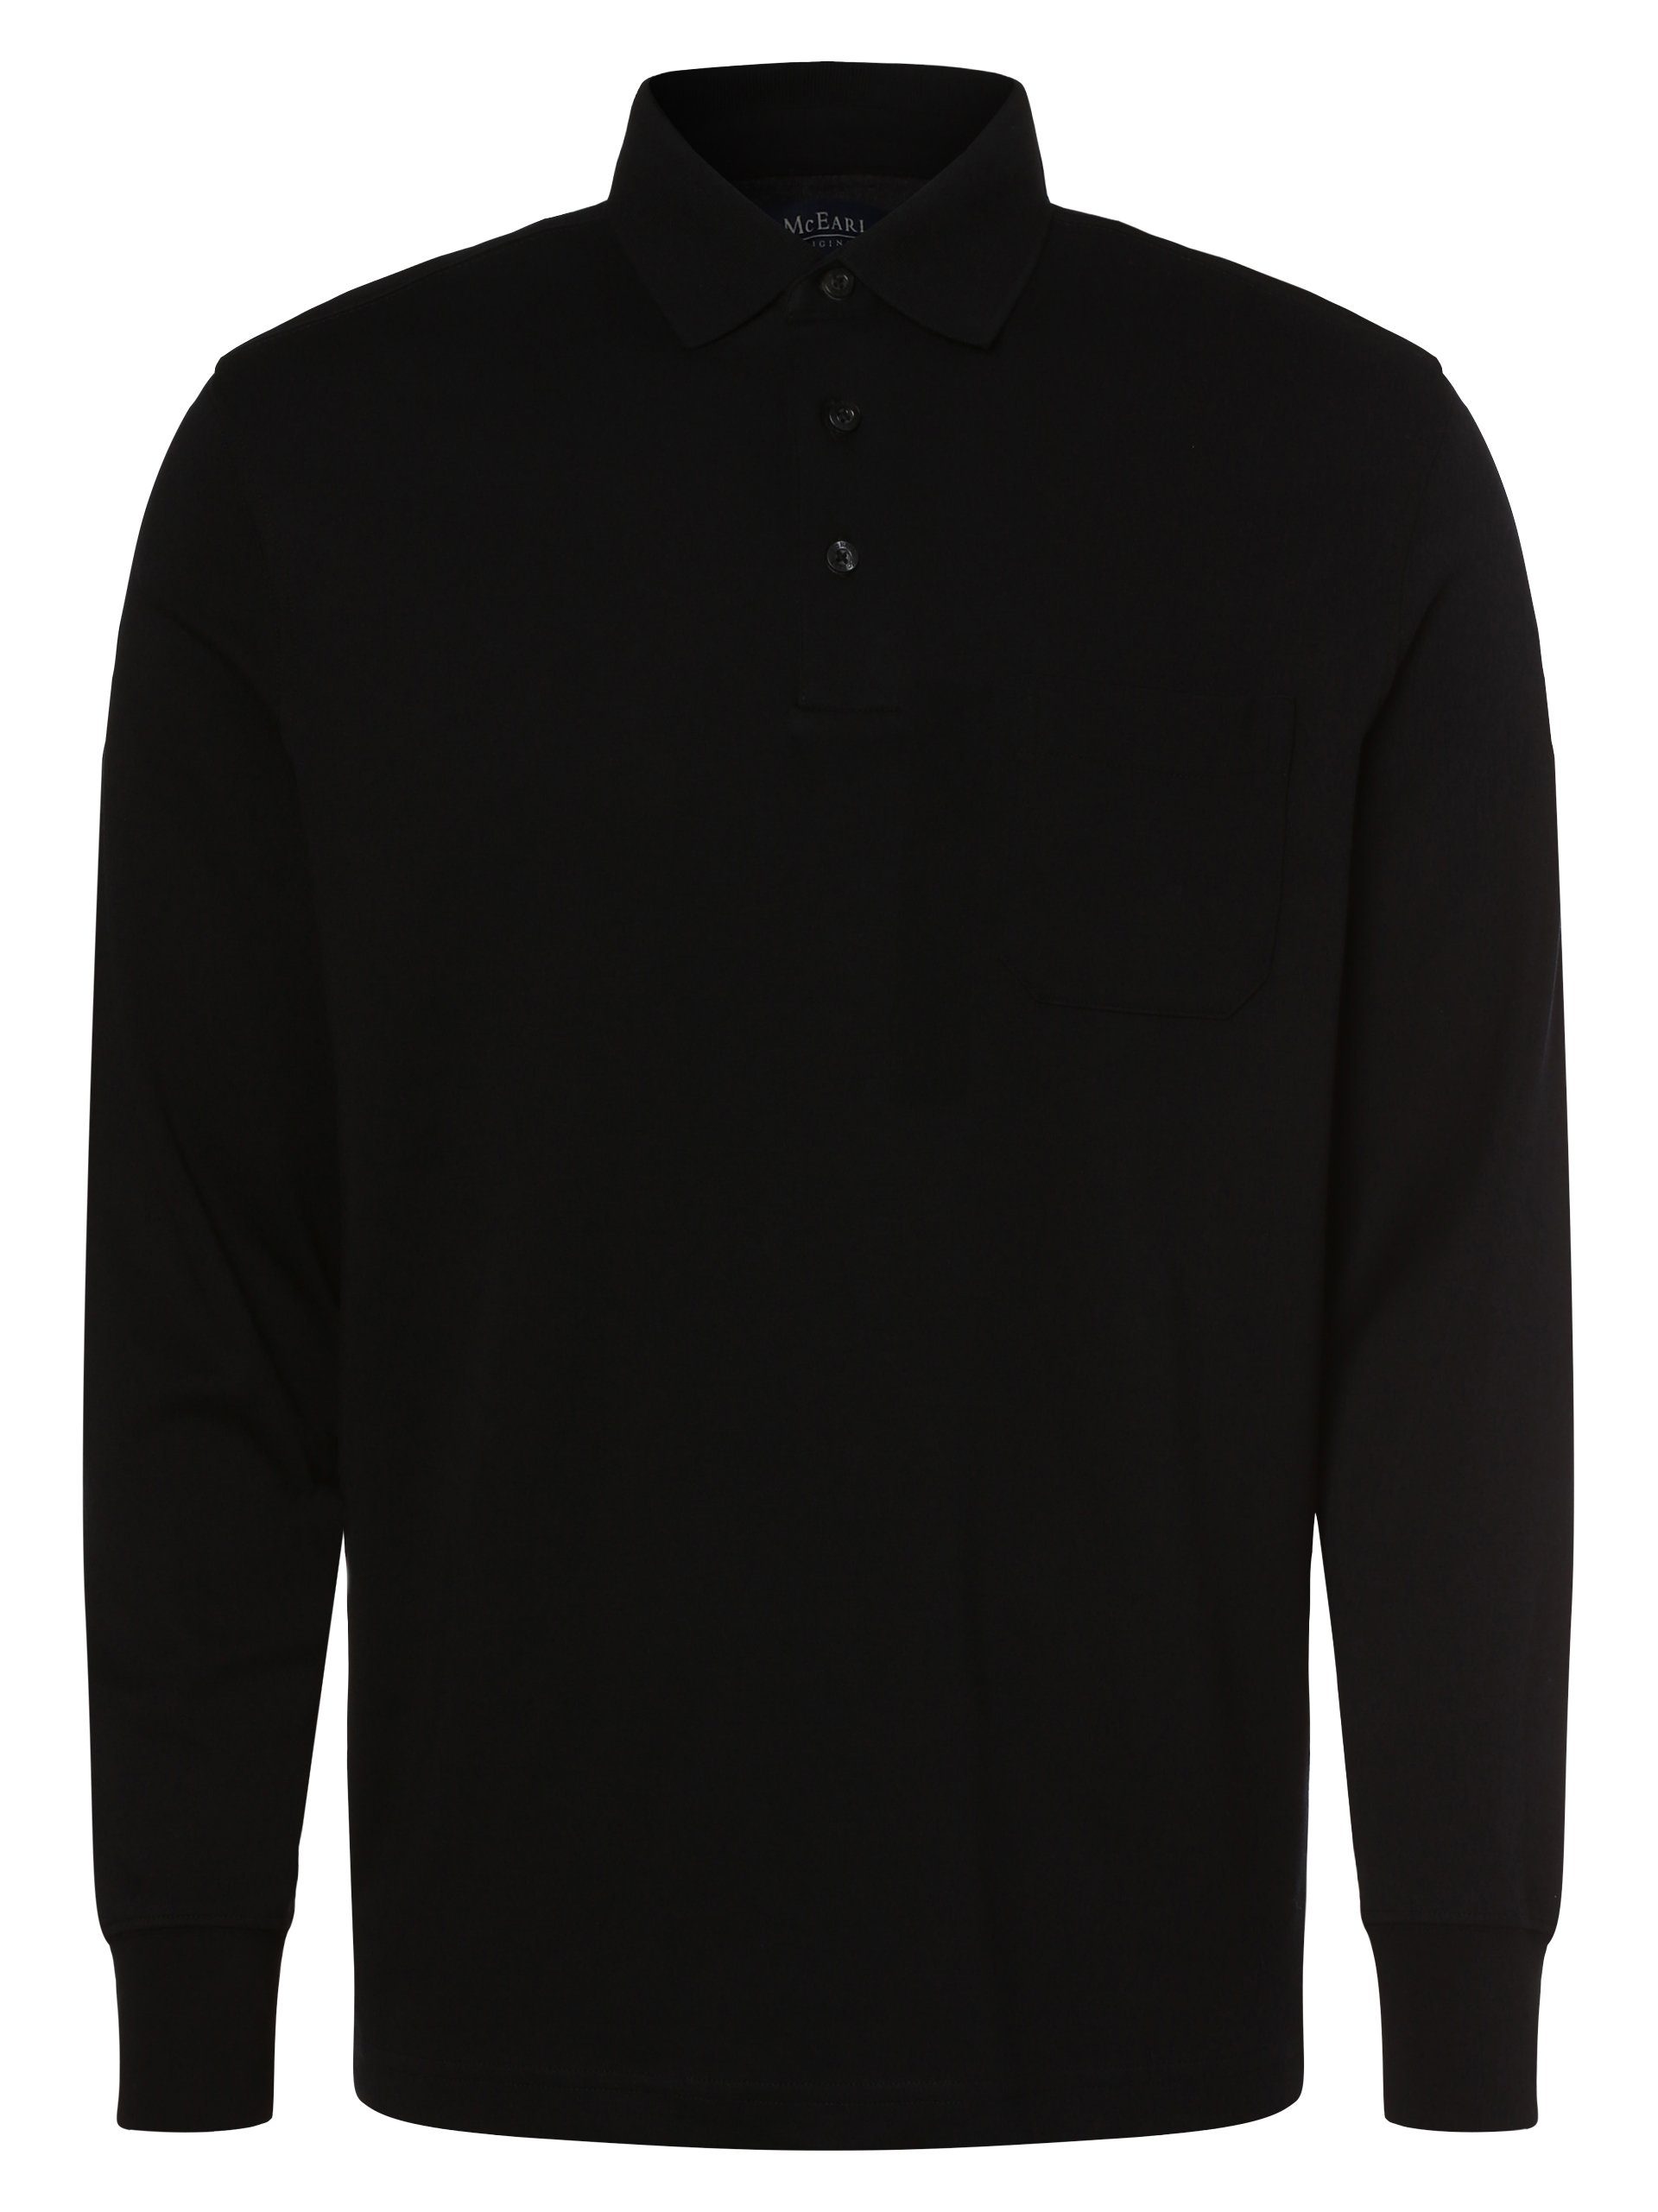 Mc Earl Poloshirt schwarz | Poloshirts